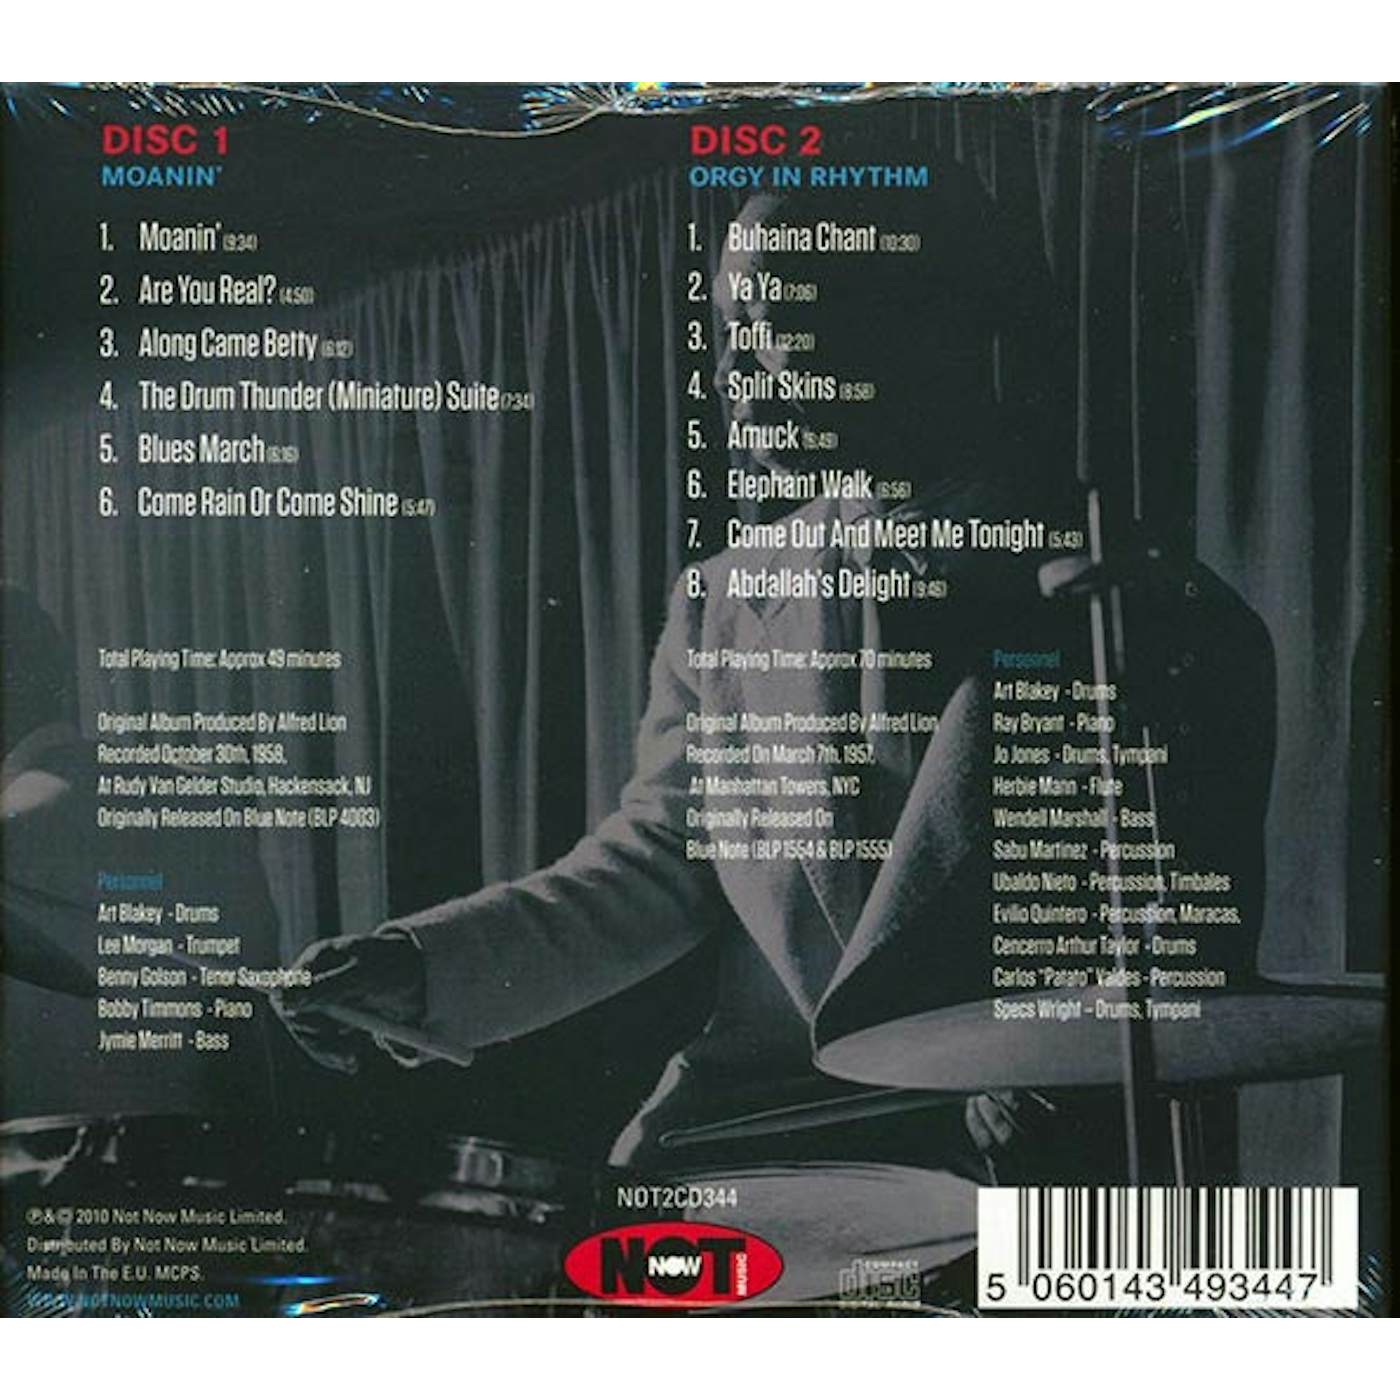 Art Blakey  CD -  Moanin (2xCD)